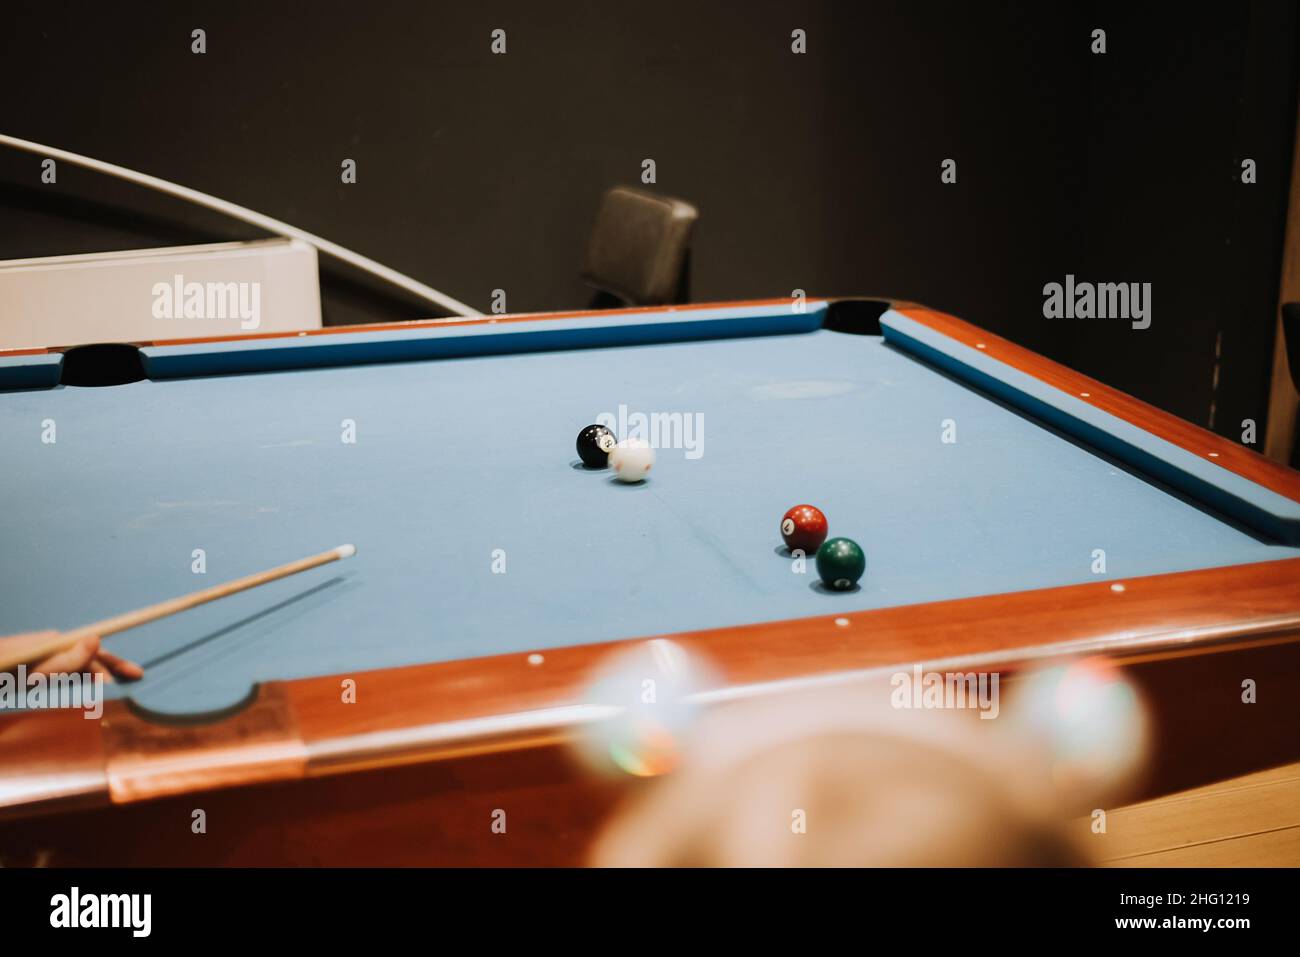 billiard pool table with balls Stock Photo